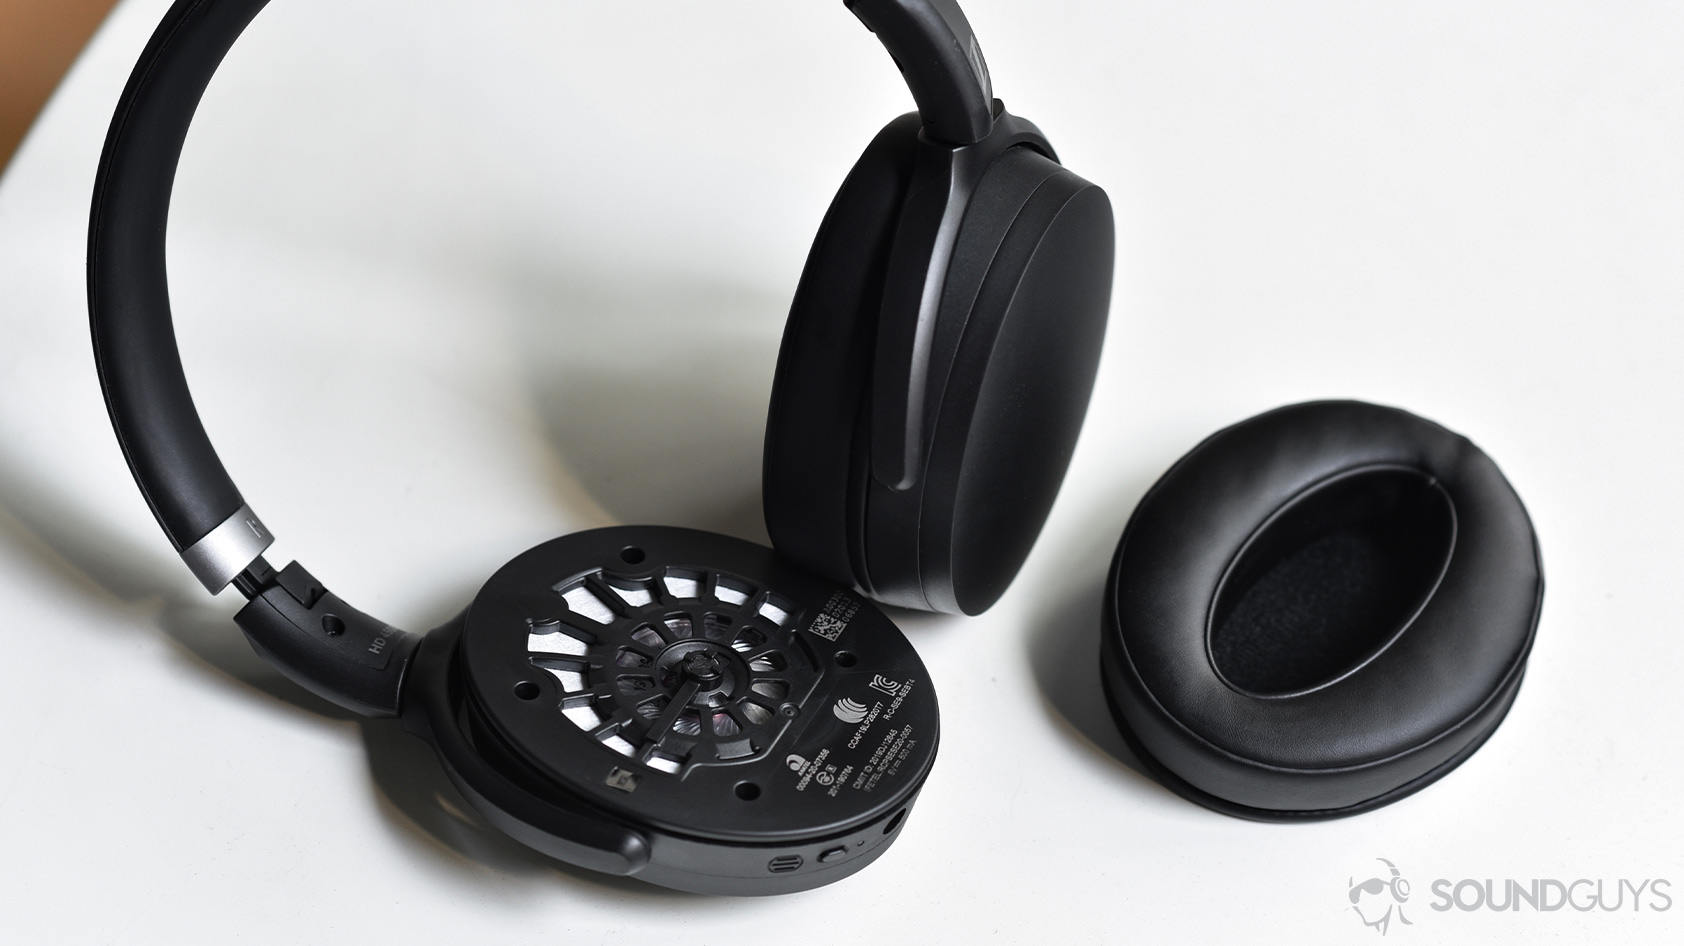 Sennheiser HD 450BT wireless noise cancelling headphones (black)  615104340961